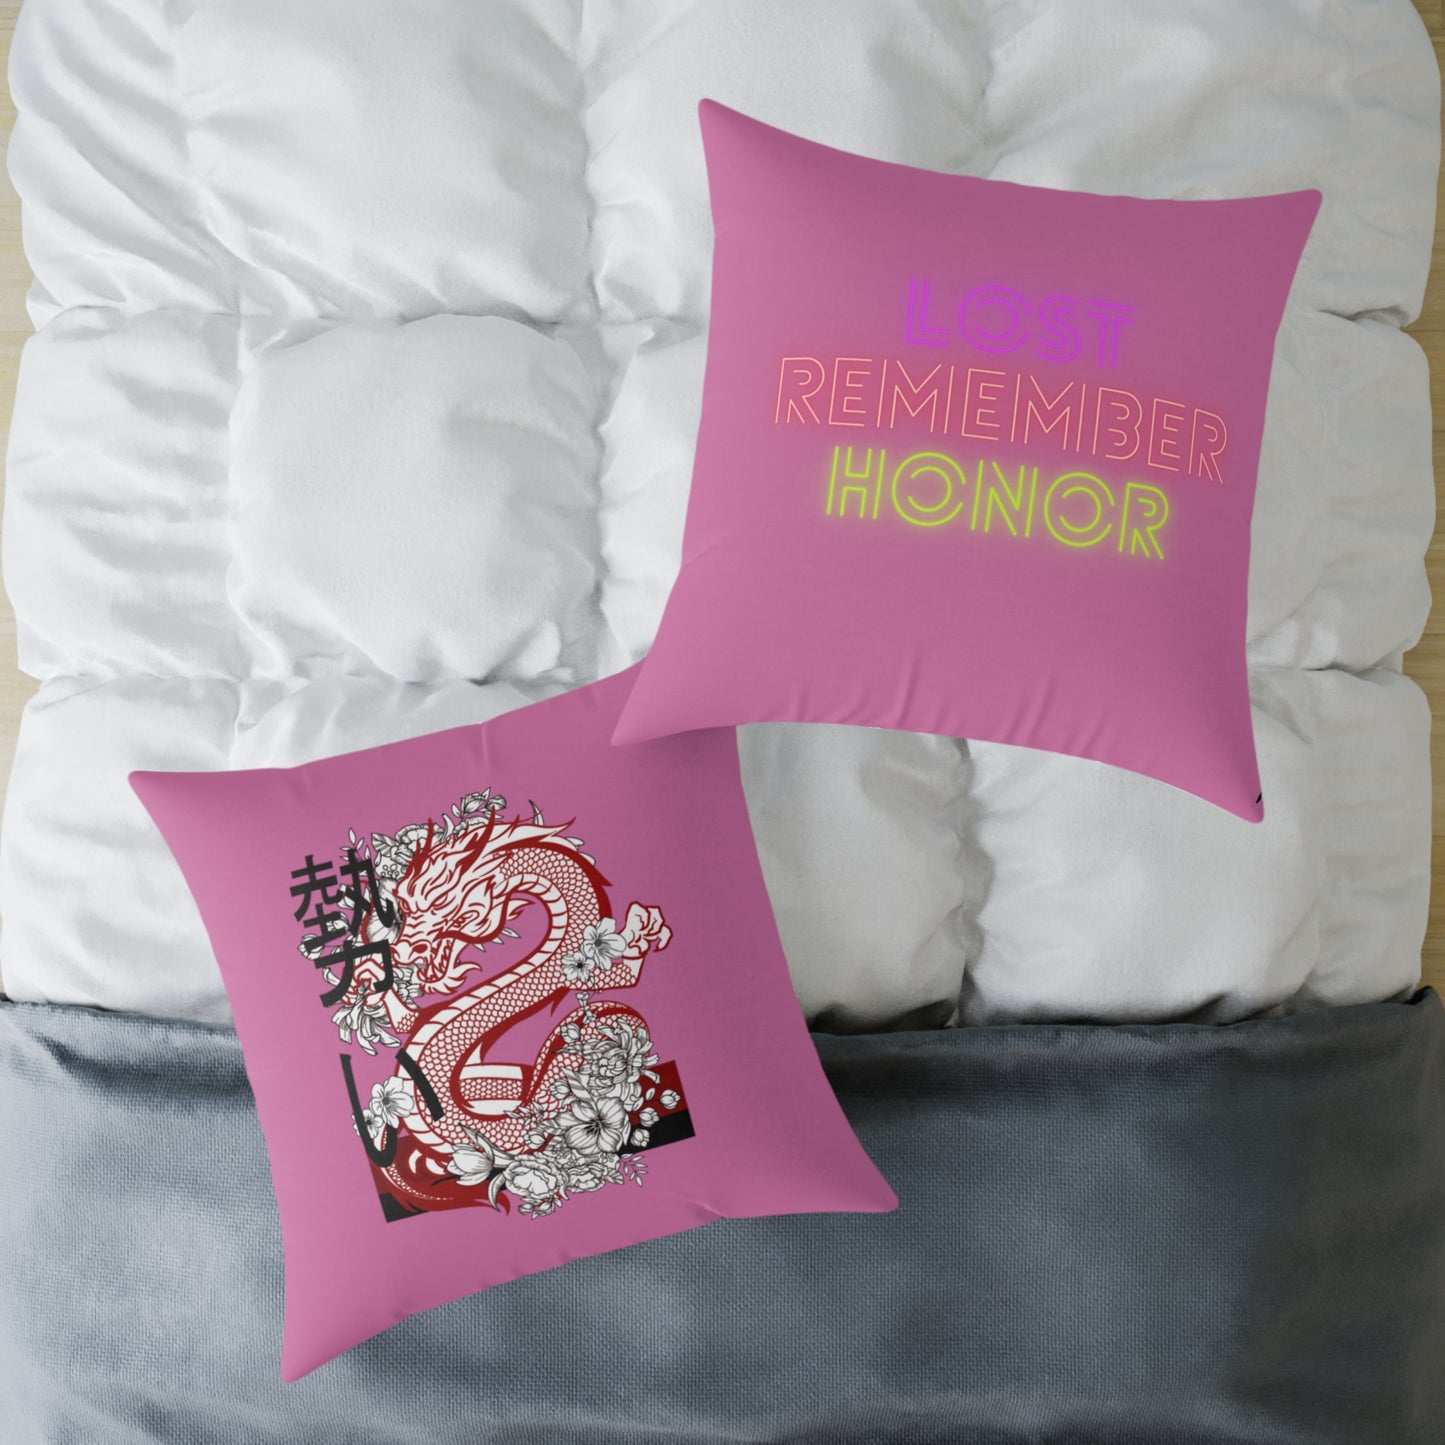 Spun Polyester Pillow: Dragons Lite Pink